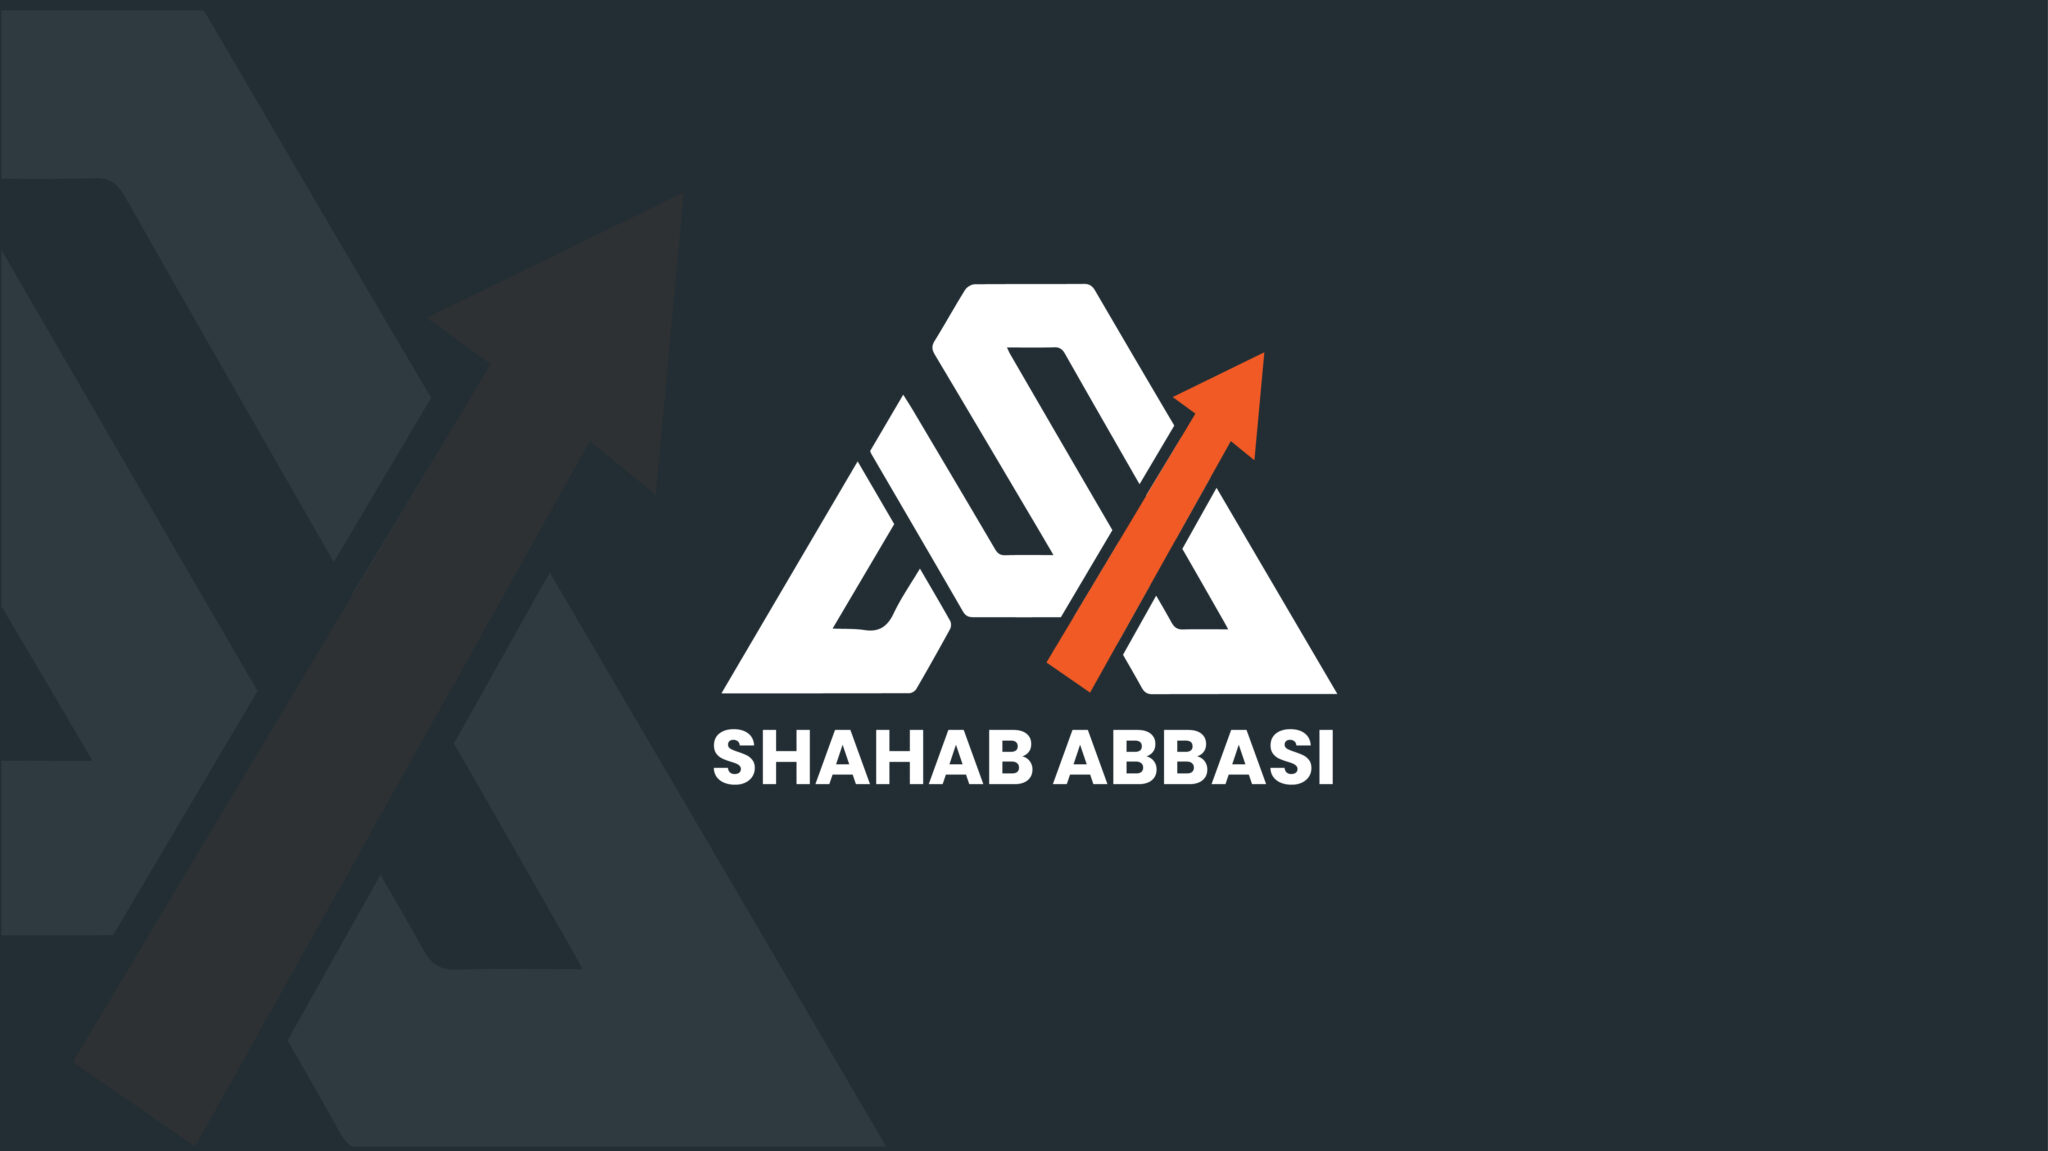 ShahabAbbasi logo